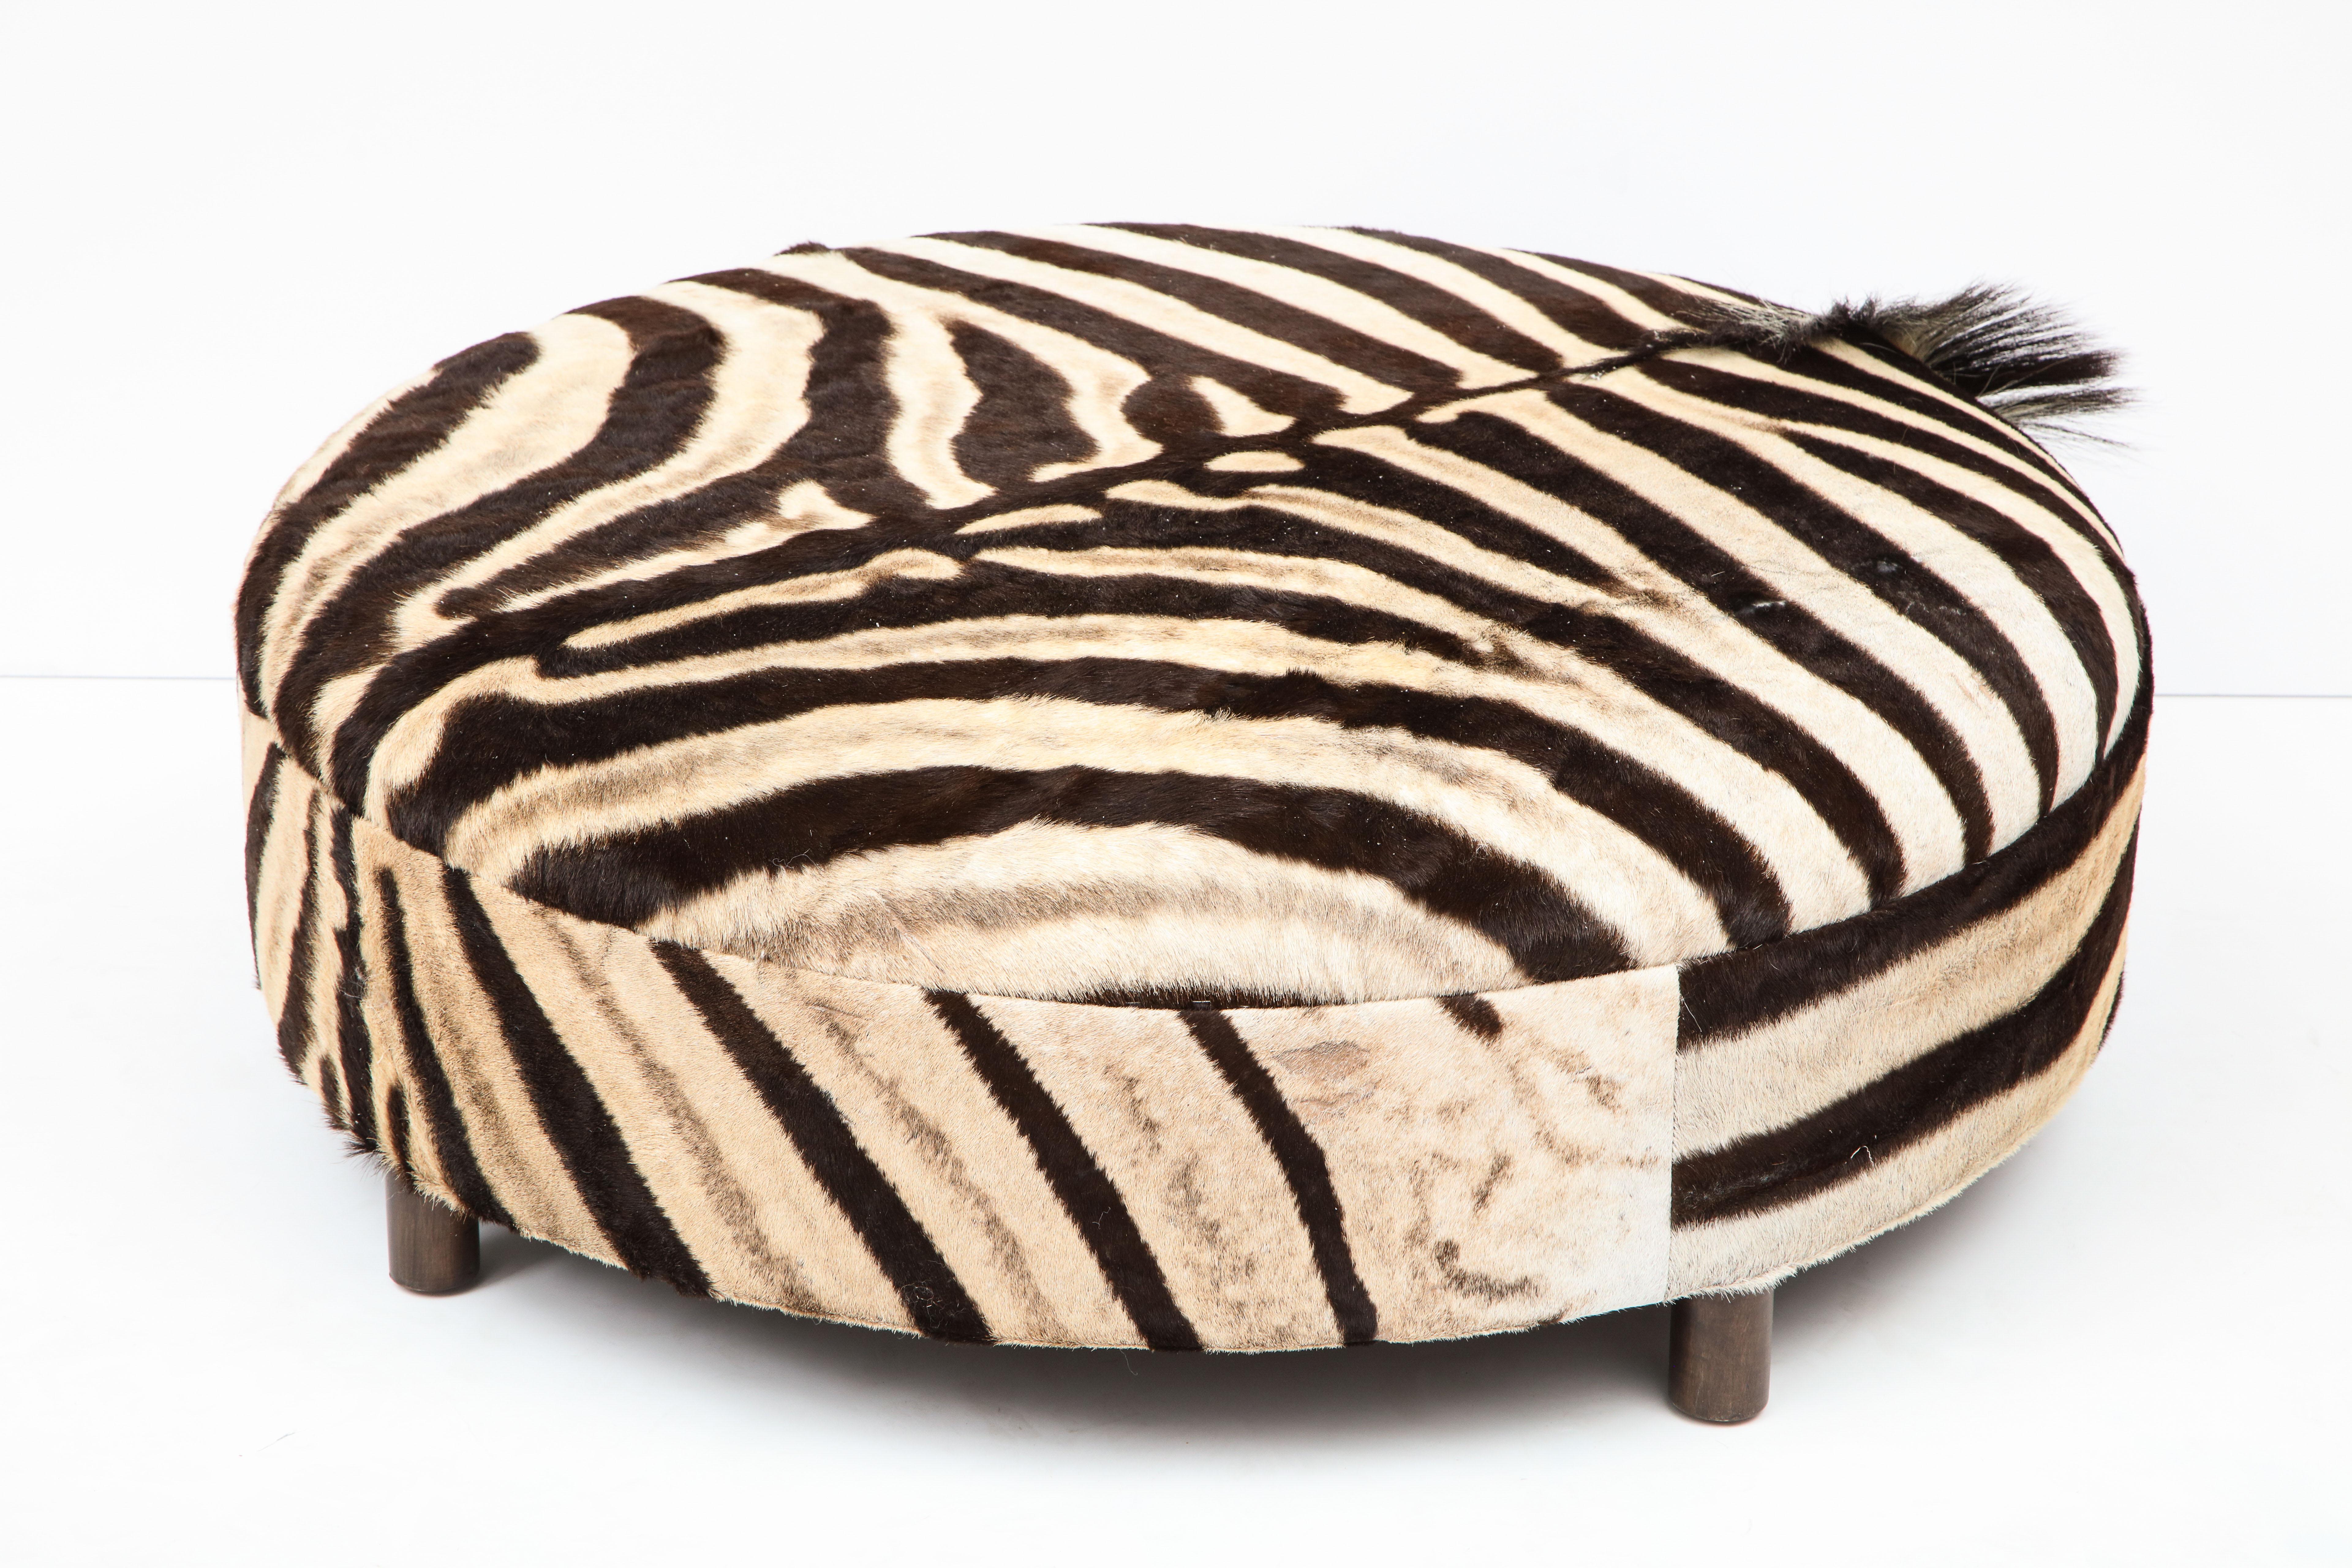 Zebra Hide Ottoman, Chocolate & Cream, Round, Contemporary, New Hides, USA Made For Sale 1